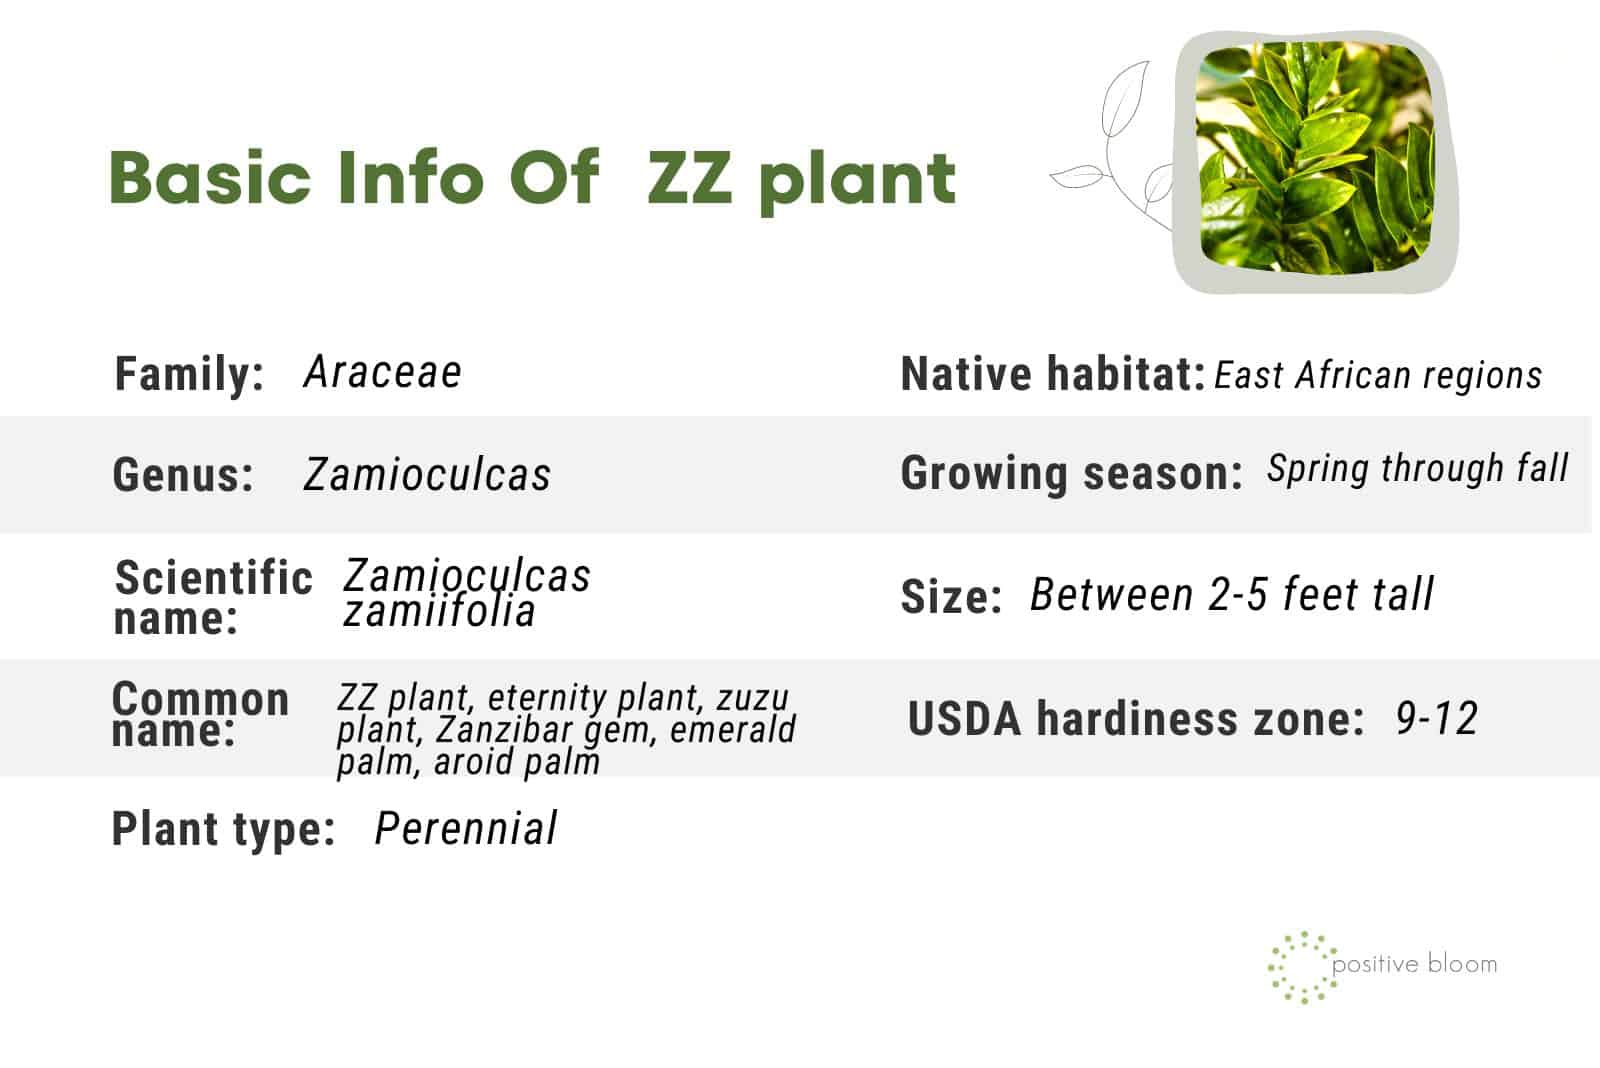 Basic Info Of ZZ plant